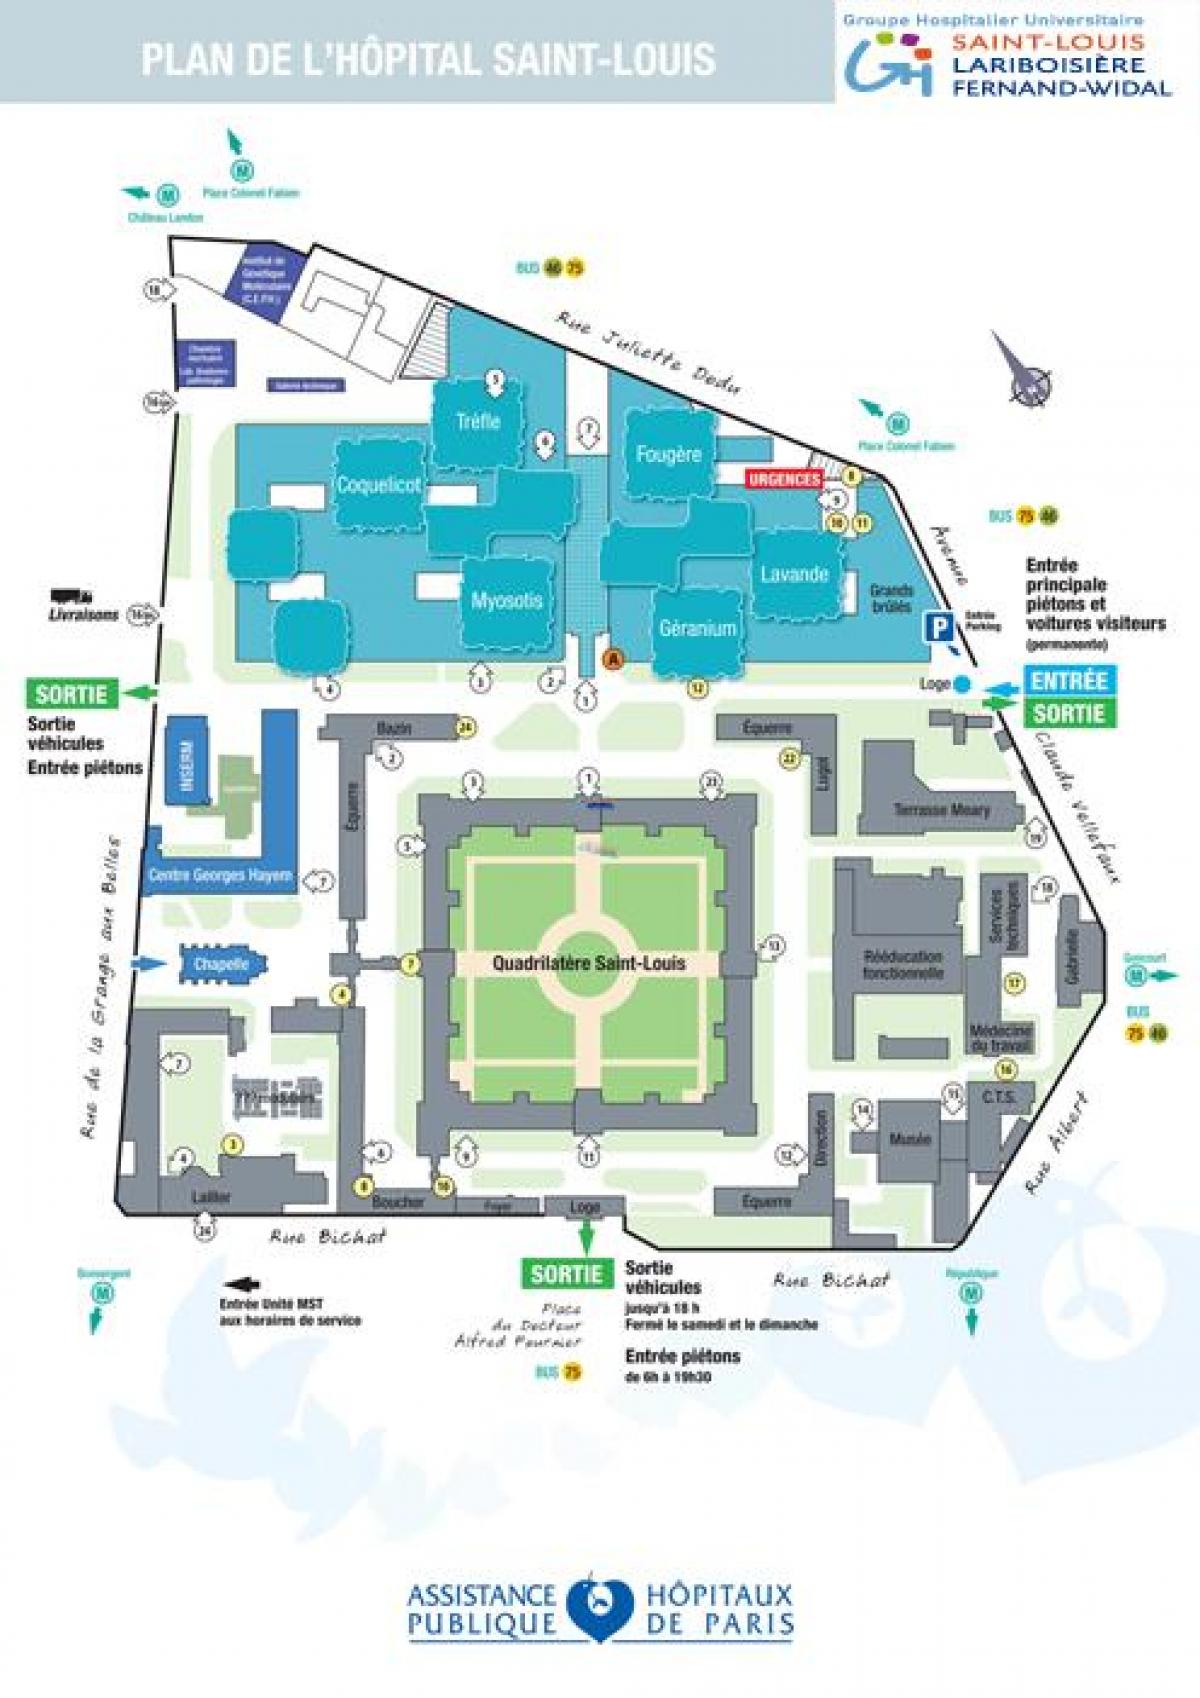 Map of Saint-Louis hospital